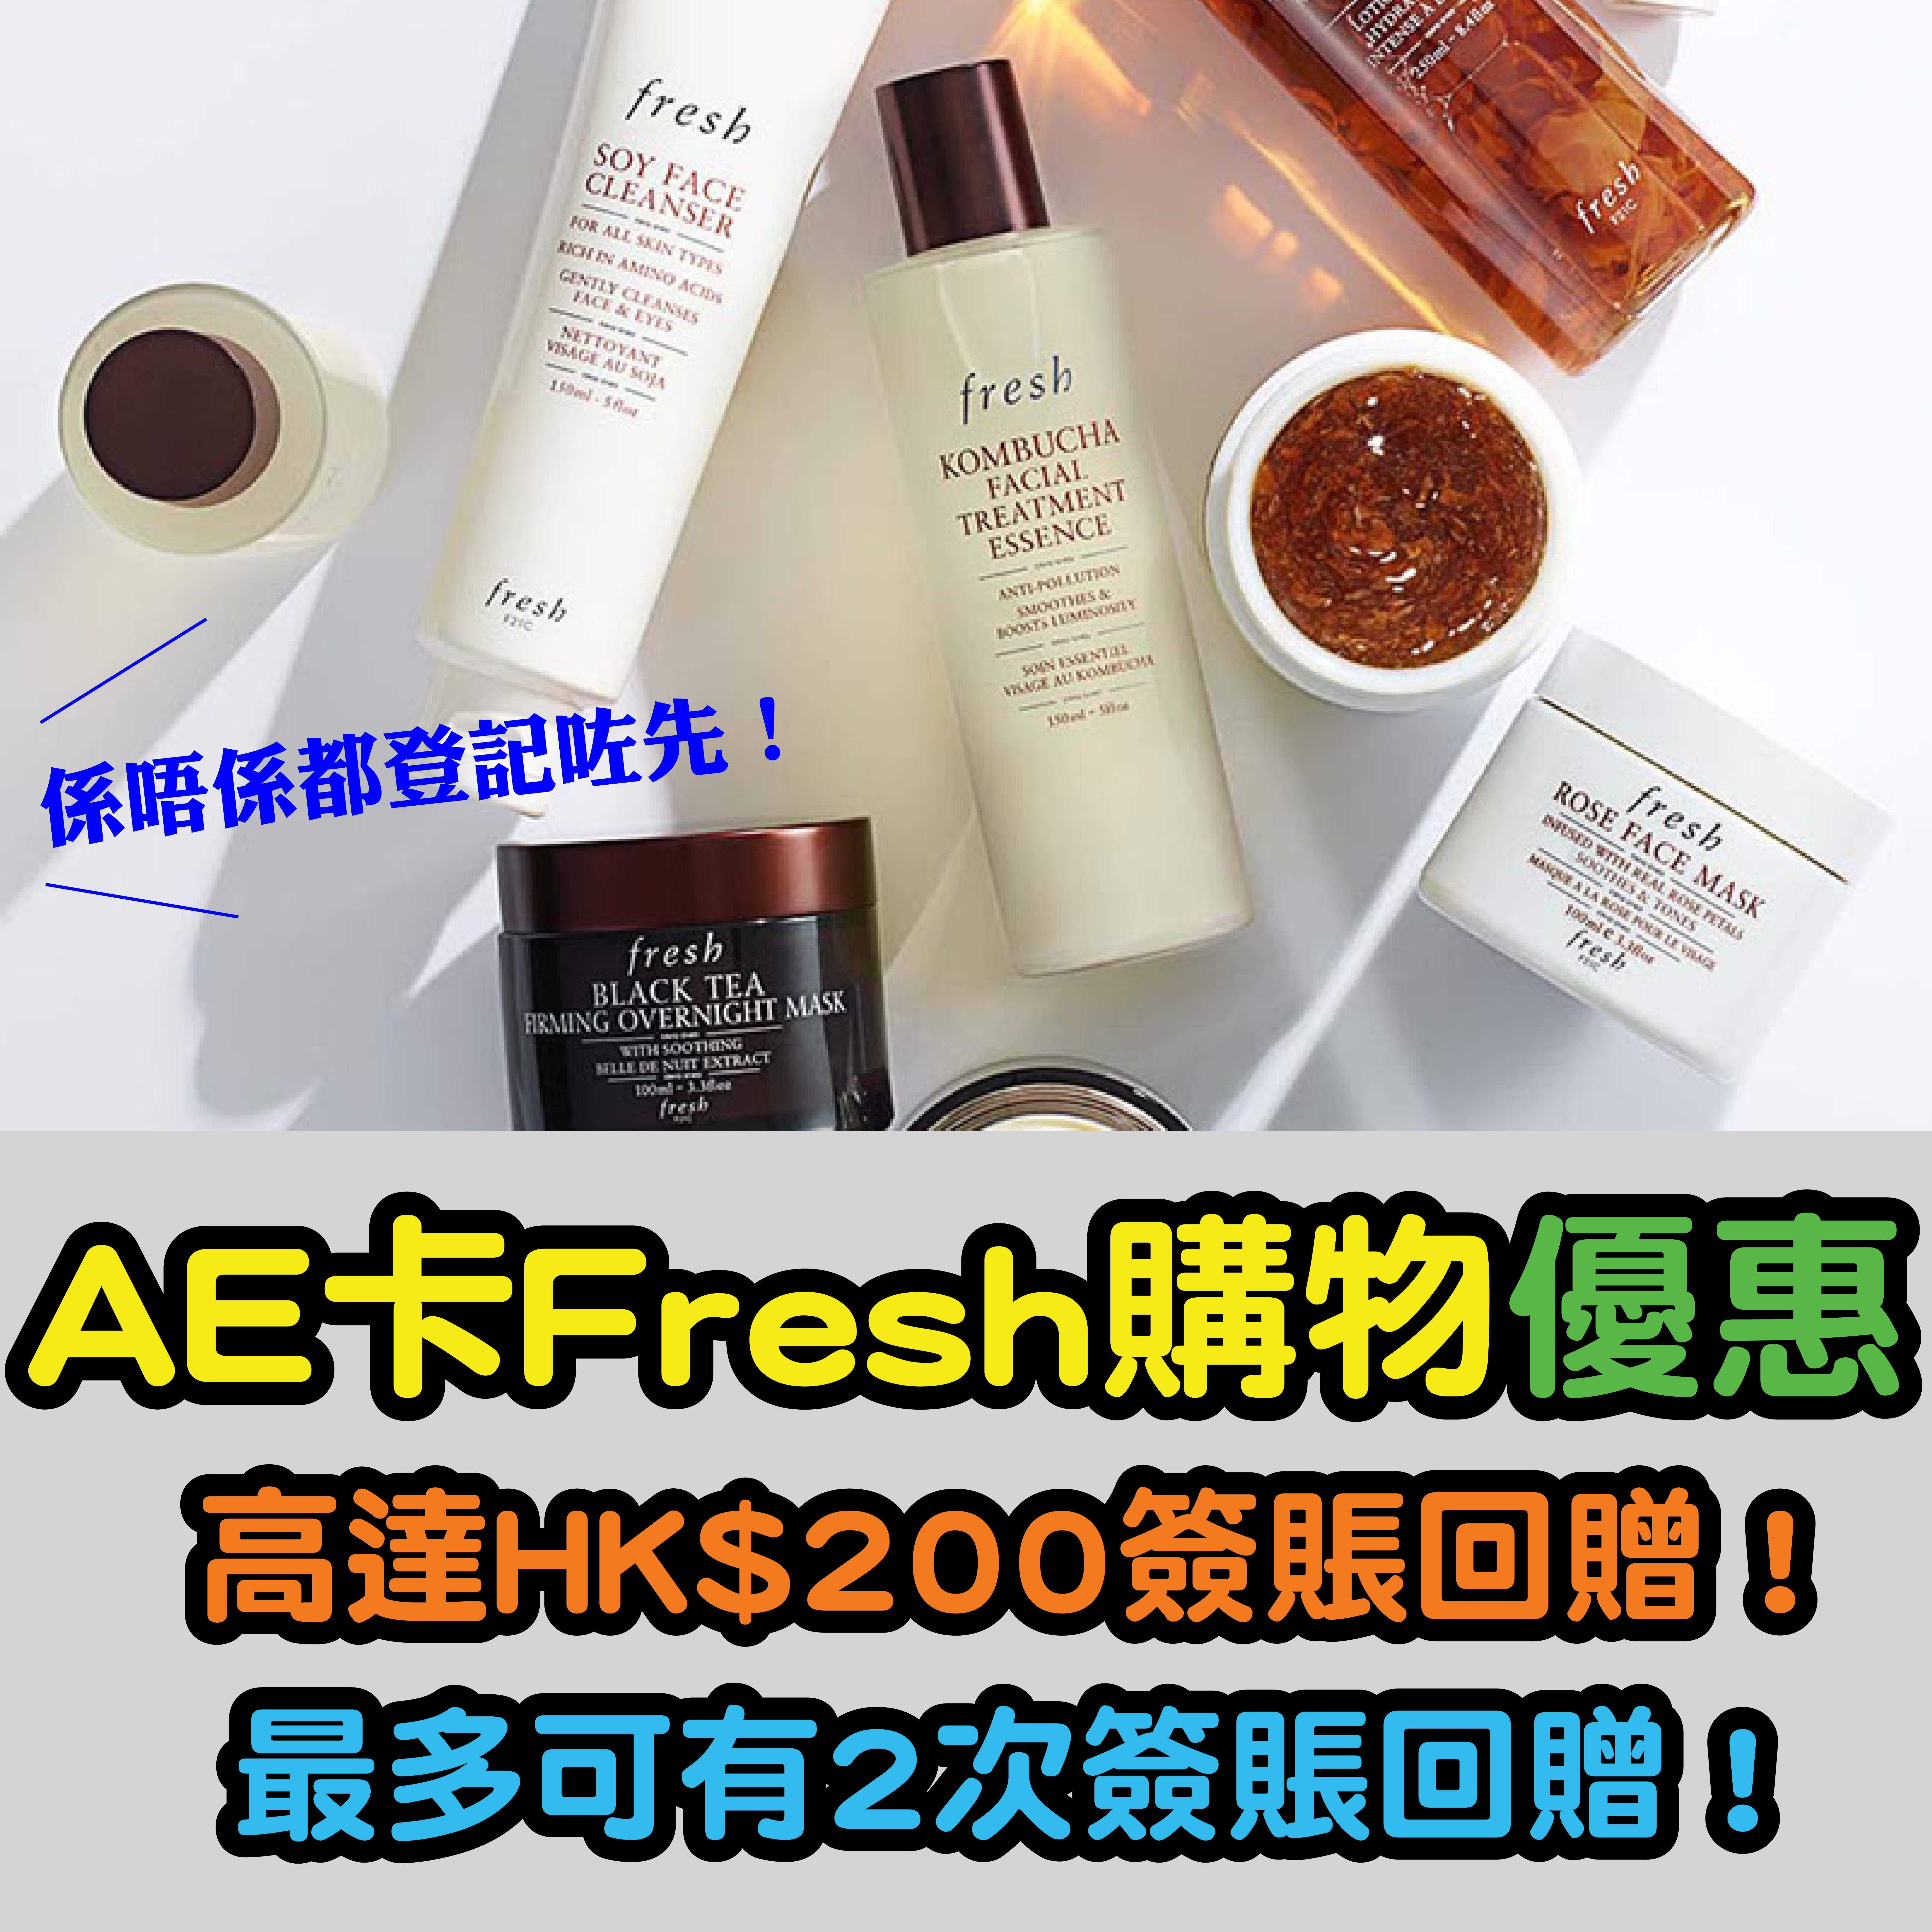 【AE卡Fresh購物優惠】高達HK$200簽賬回贈！係唔係都登記咗先！最多可享2次簽賬回贈！